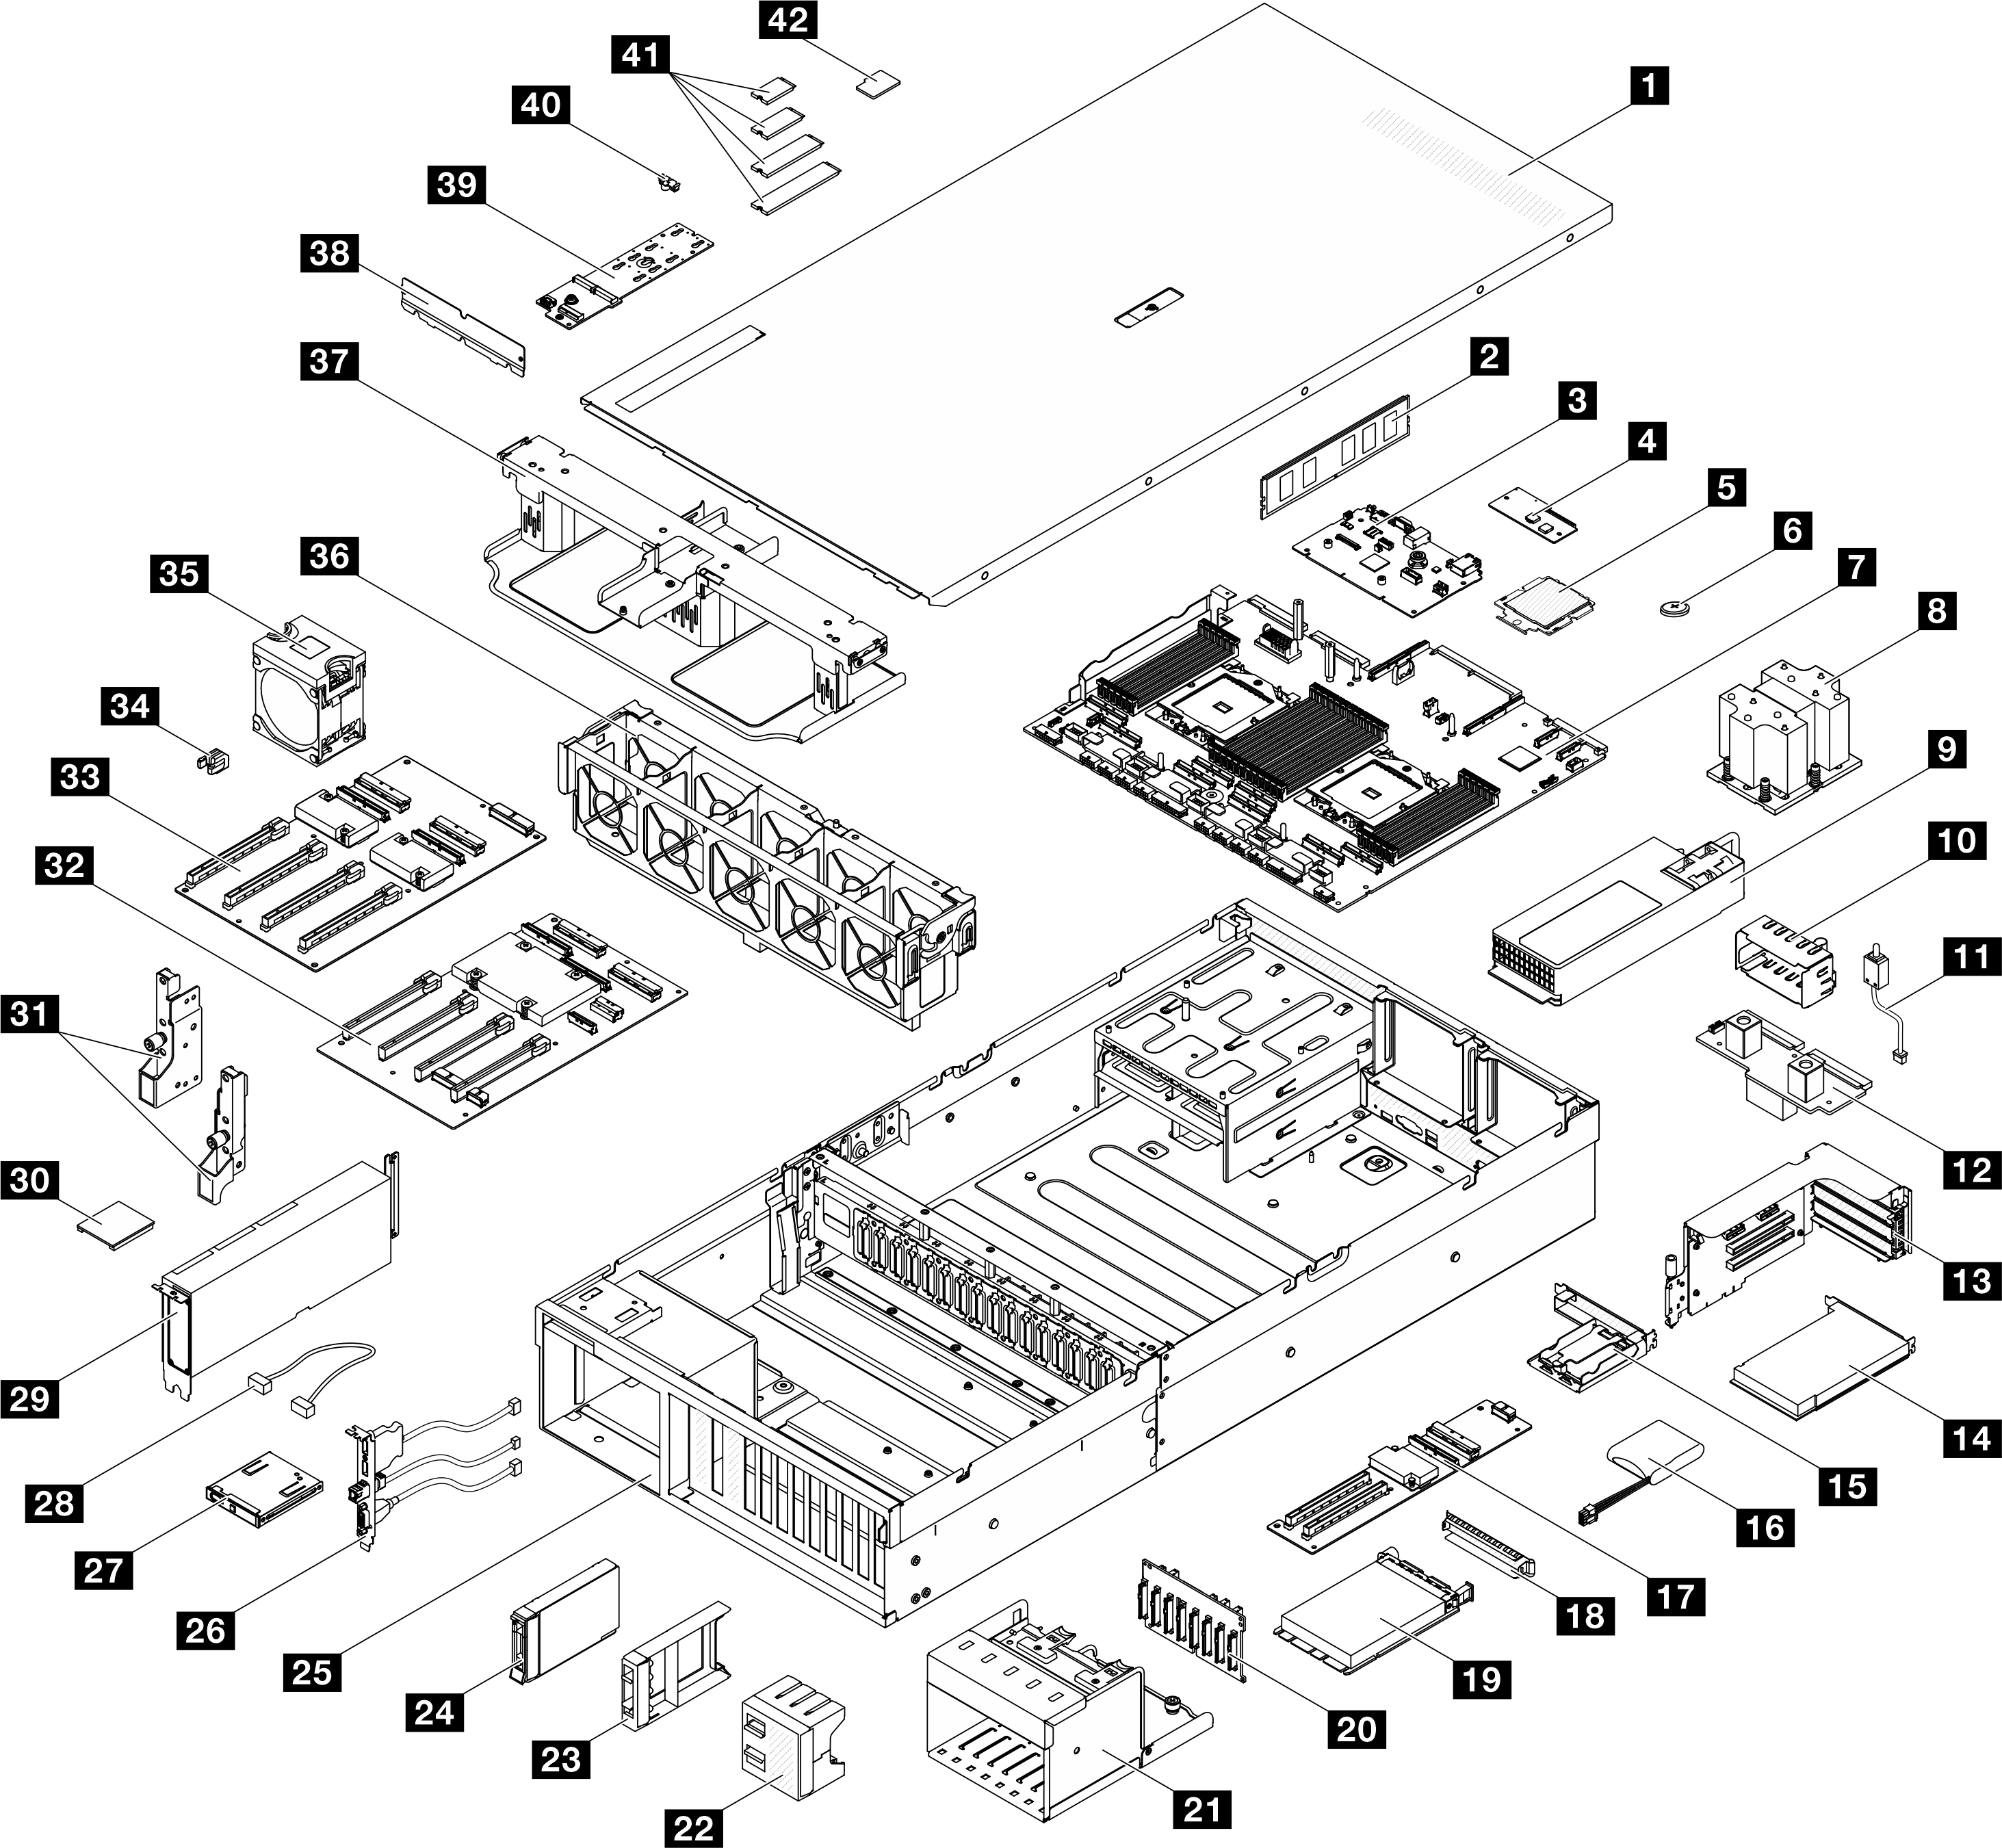 Server components of the 4-DW GPU 型号